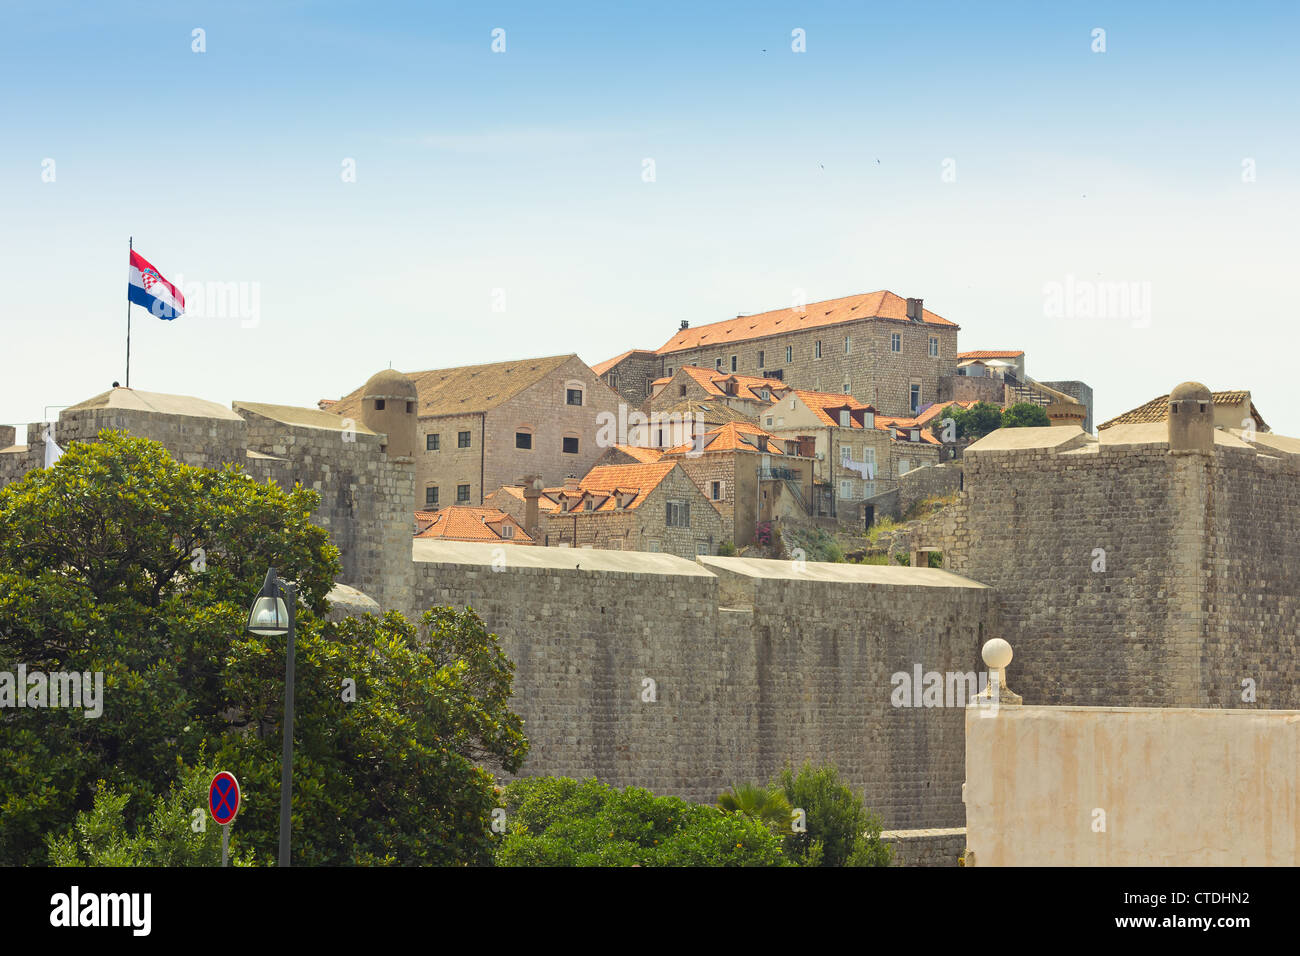 The city walls of Dubrovnik, Croatia. OldTown. Dubrovnik - UNESCO World Heritage Site. Stock Photo